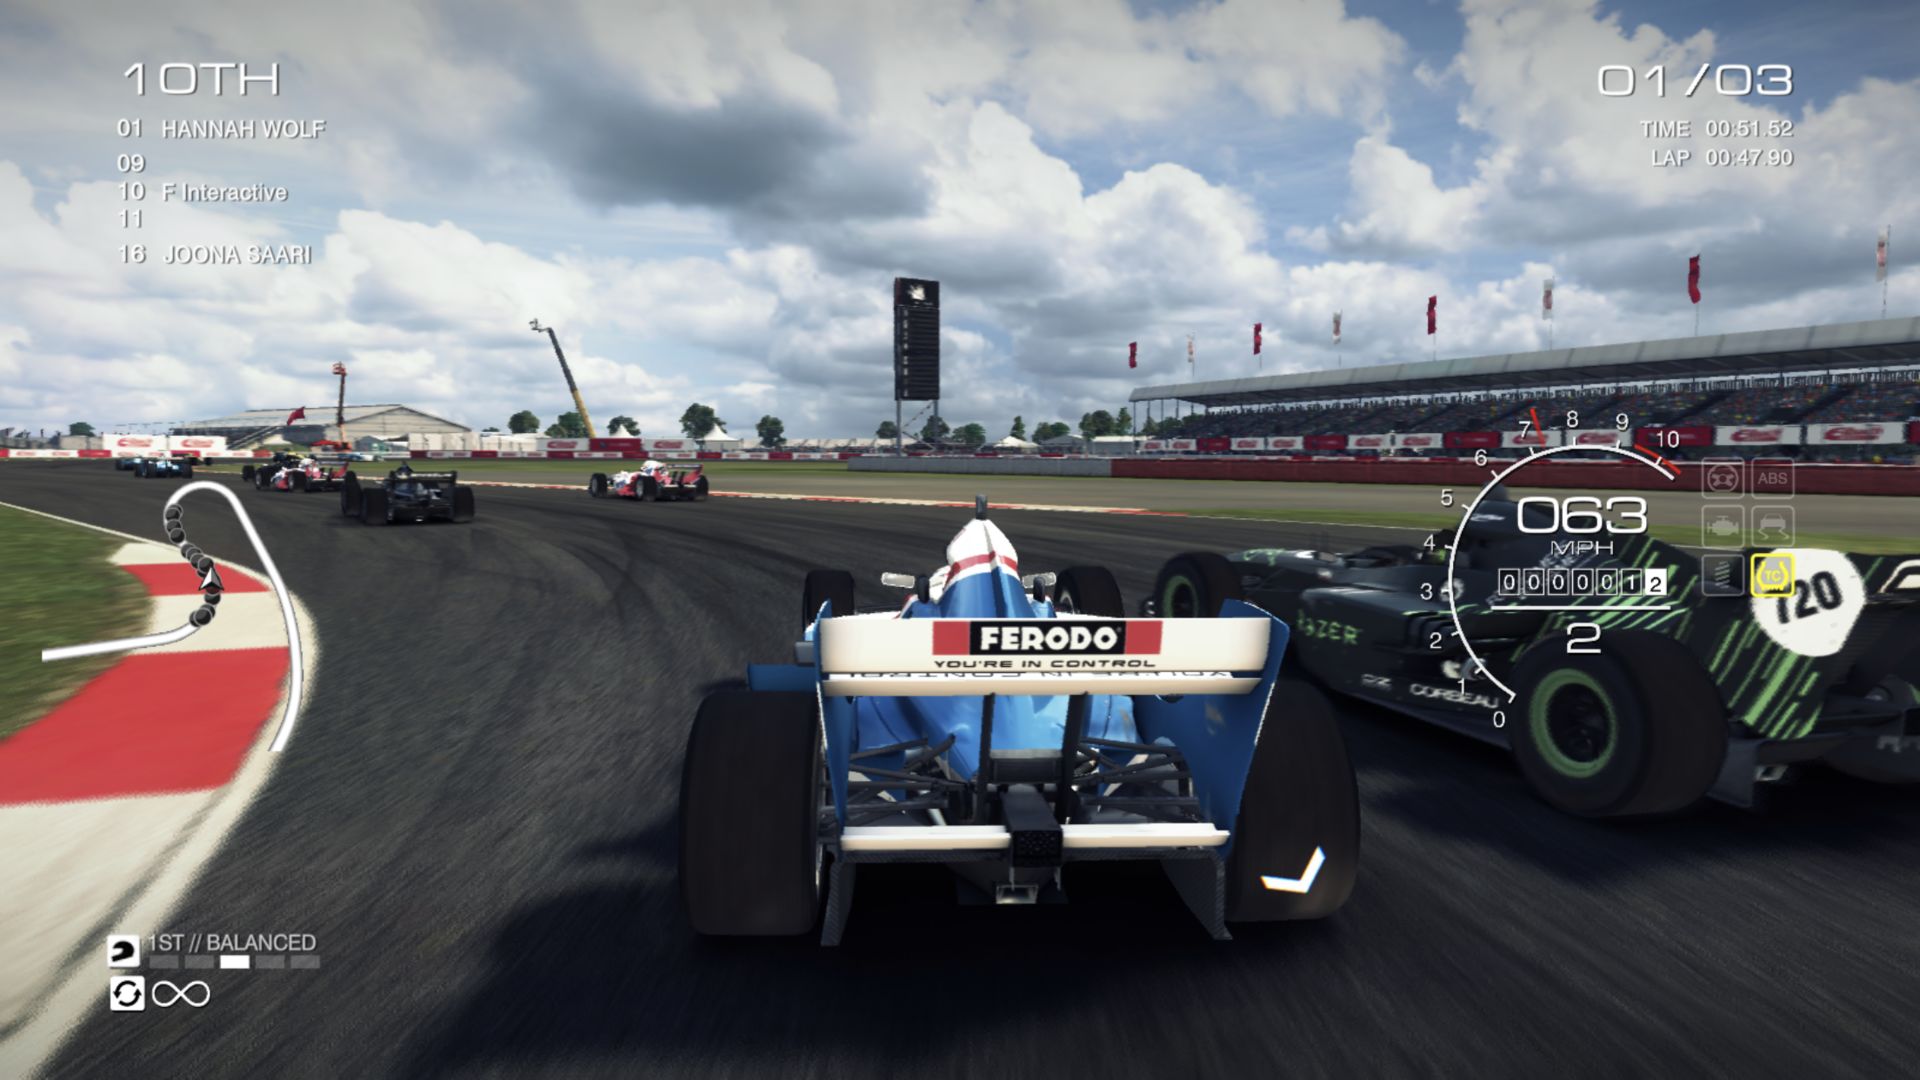 Screenshot of GRID™ Autosport - Online Multiplayer Test